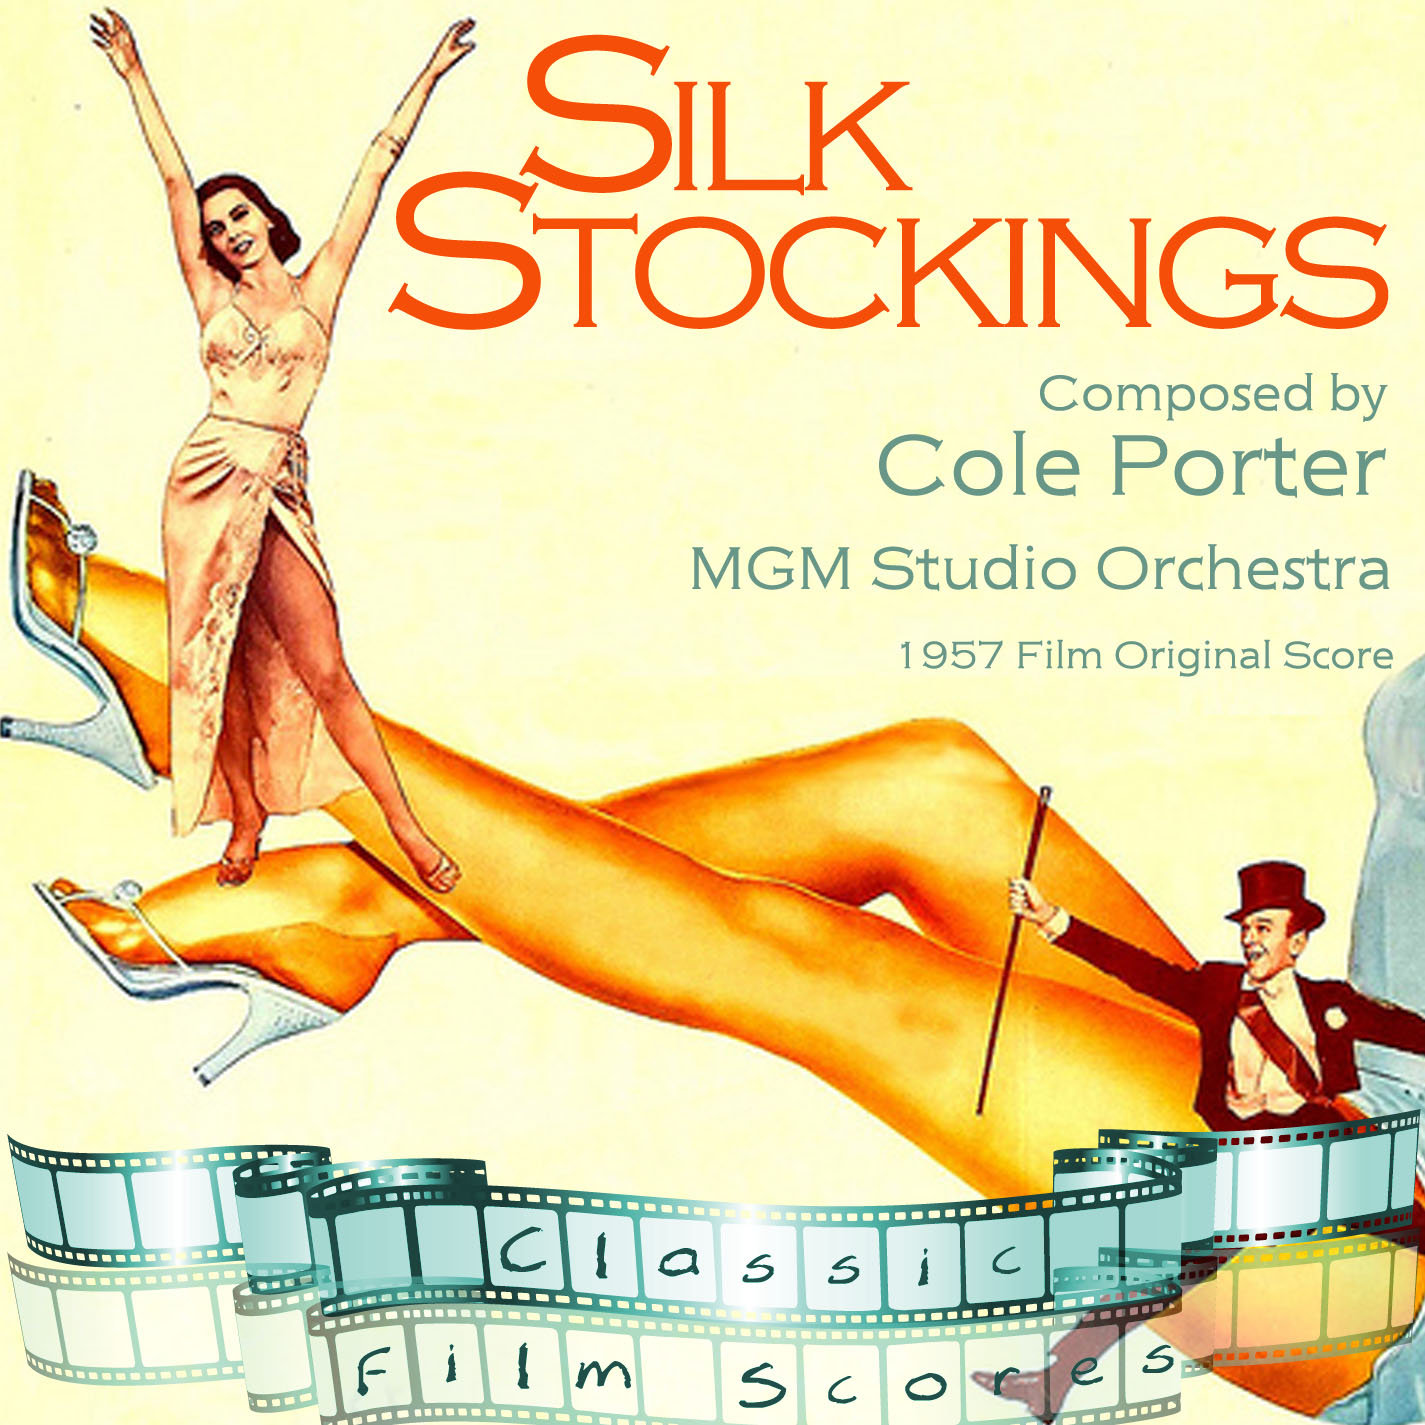 Silk stocking lover